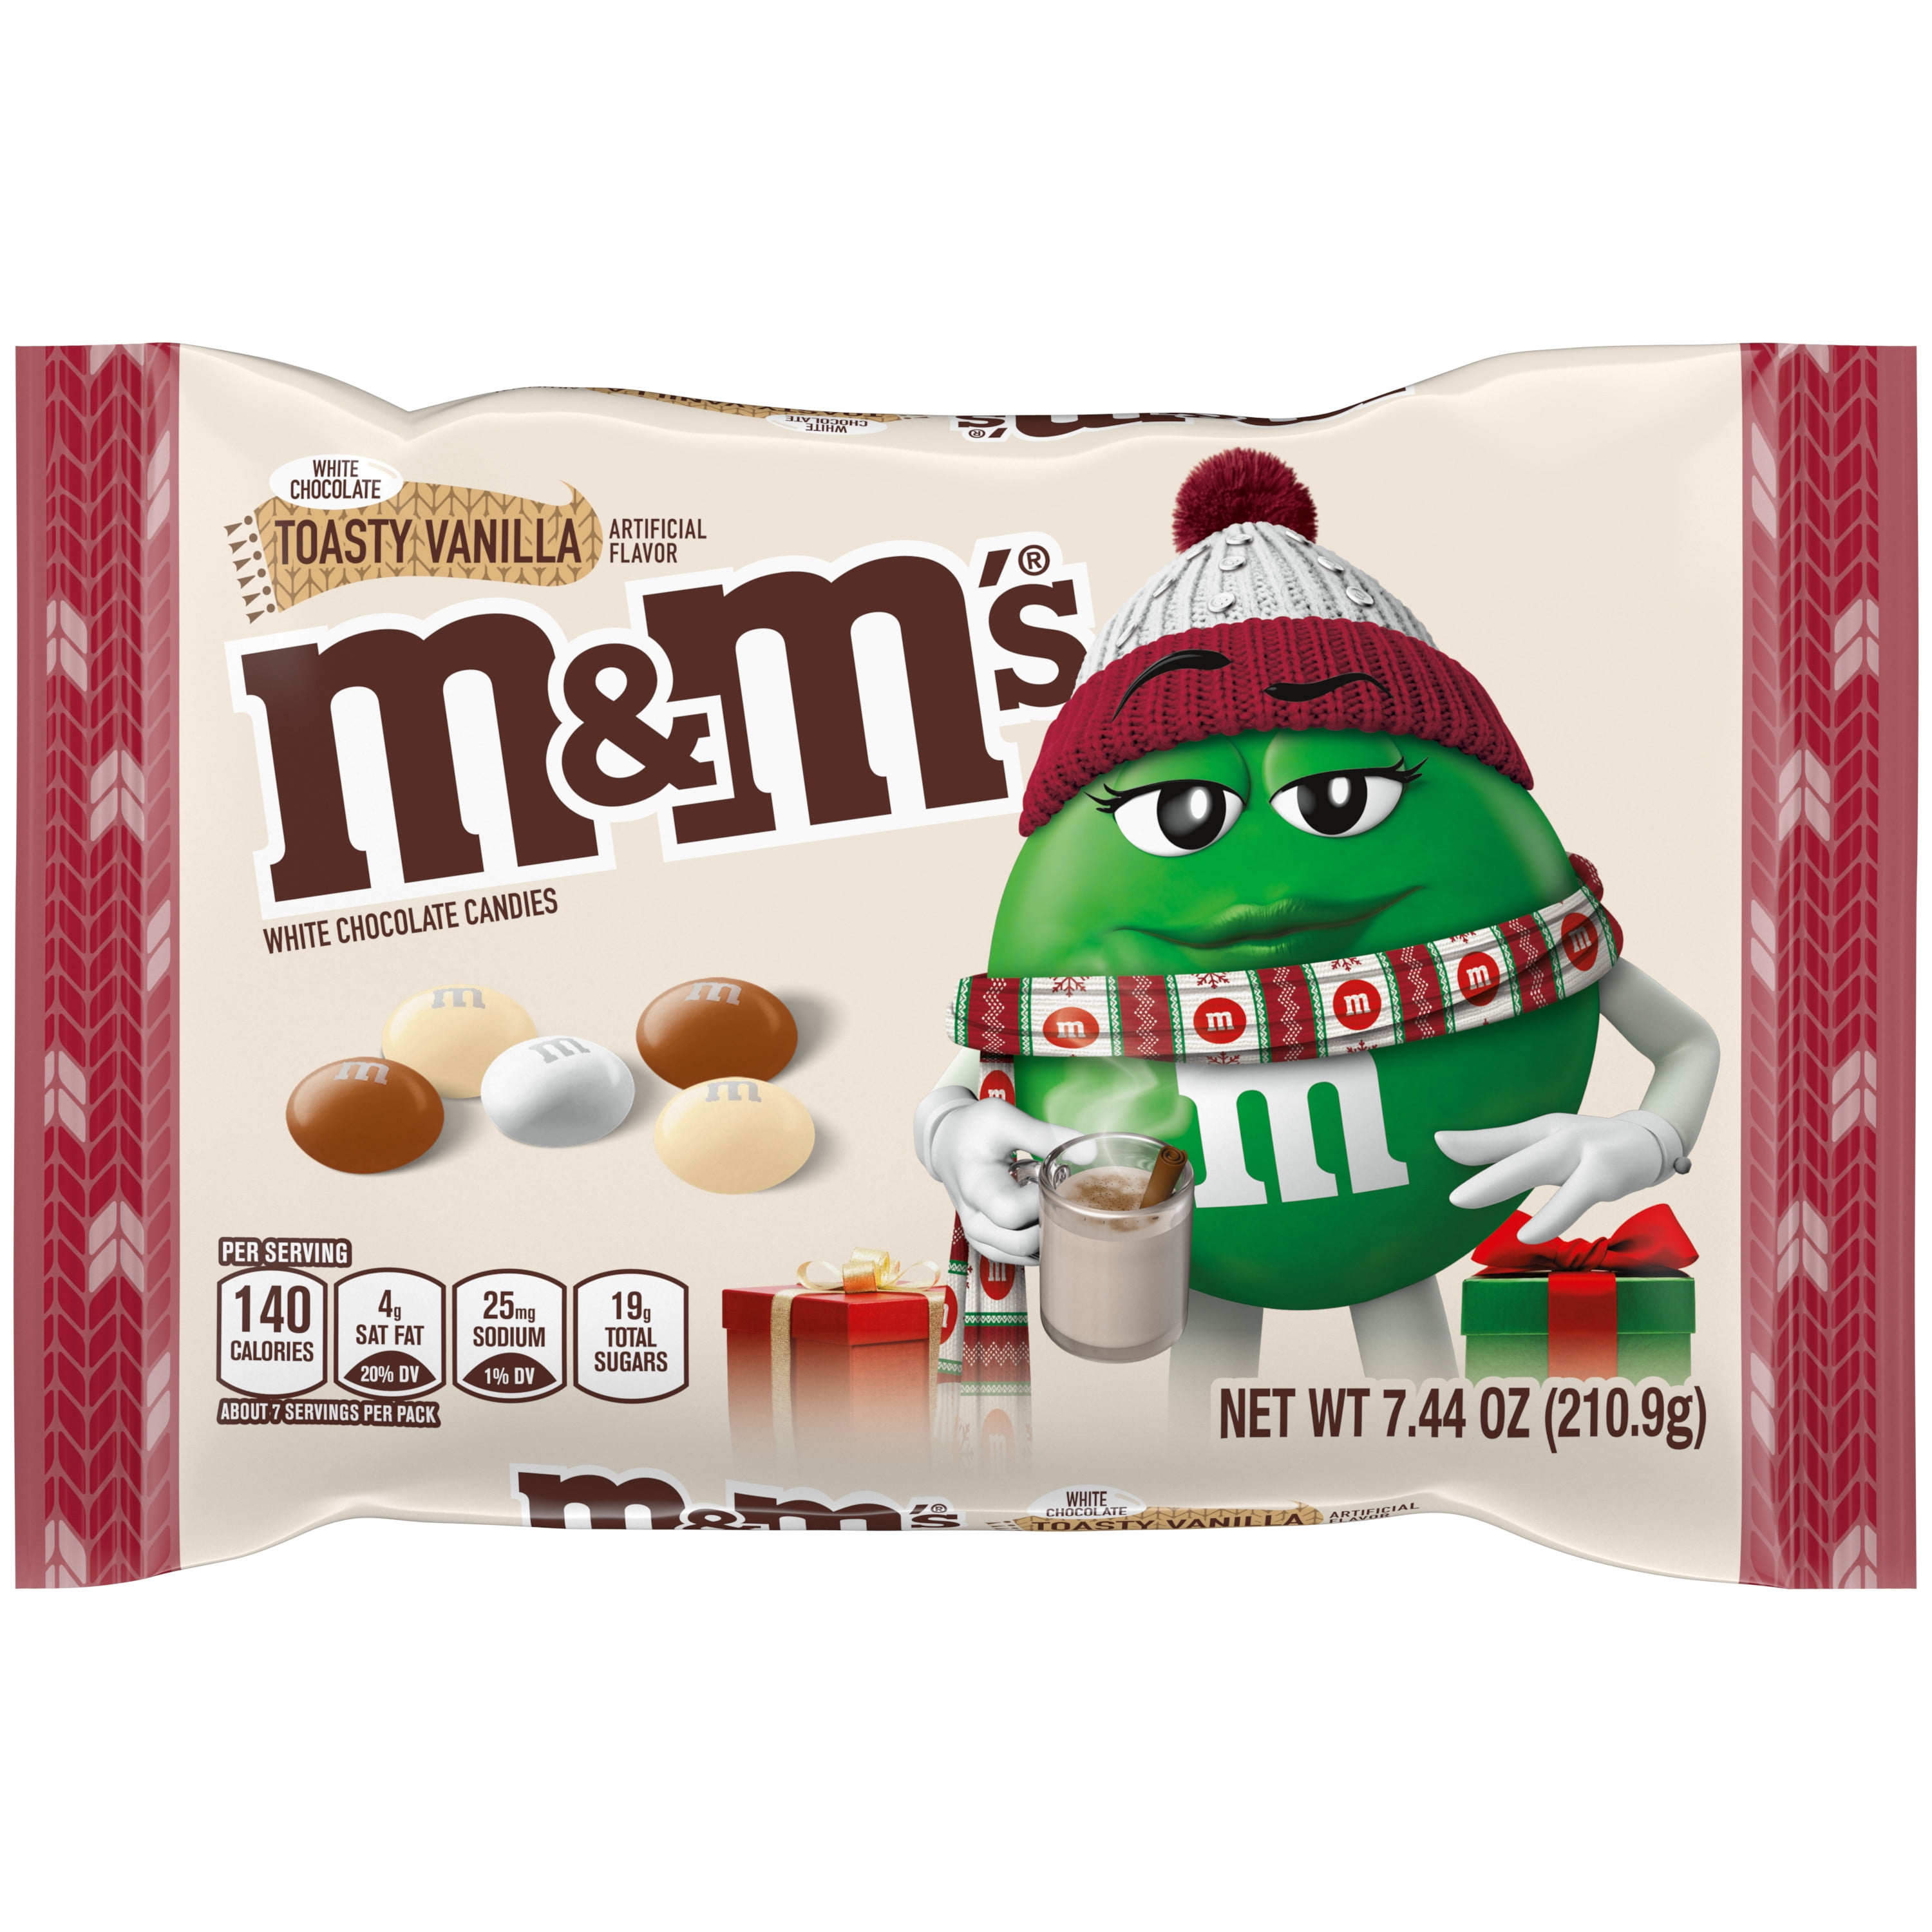 REVIEW: White Chocolate Marshmallow Crispy Treat M&M's - The Impulsive Buy